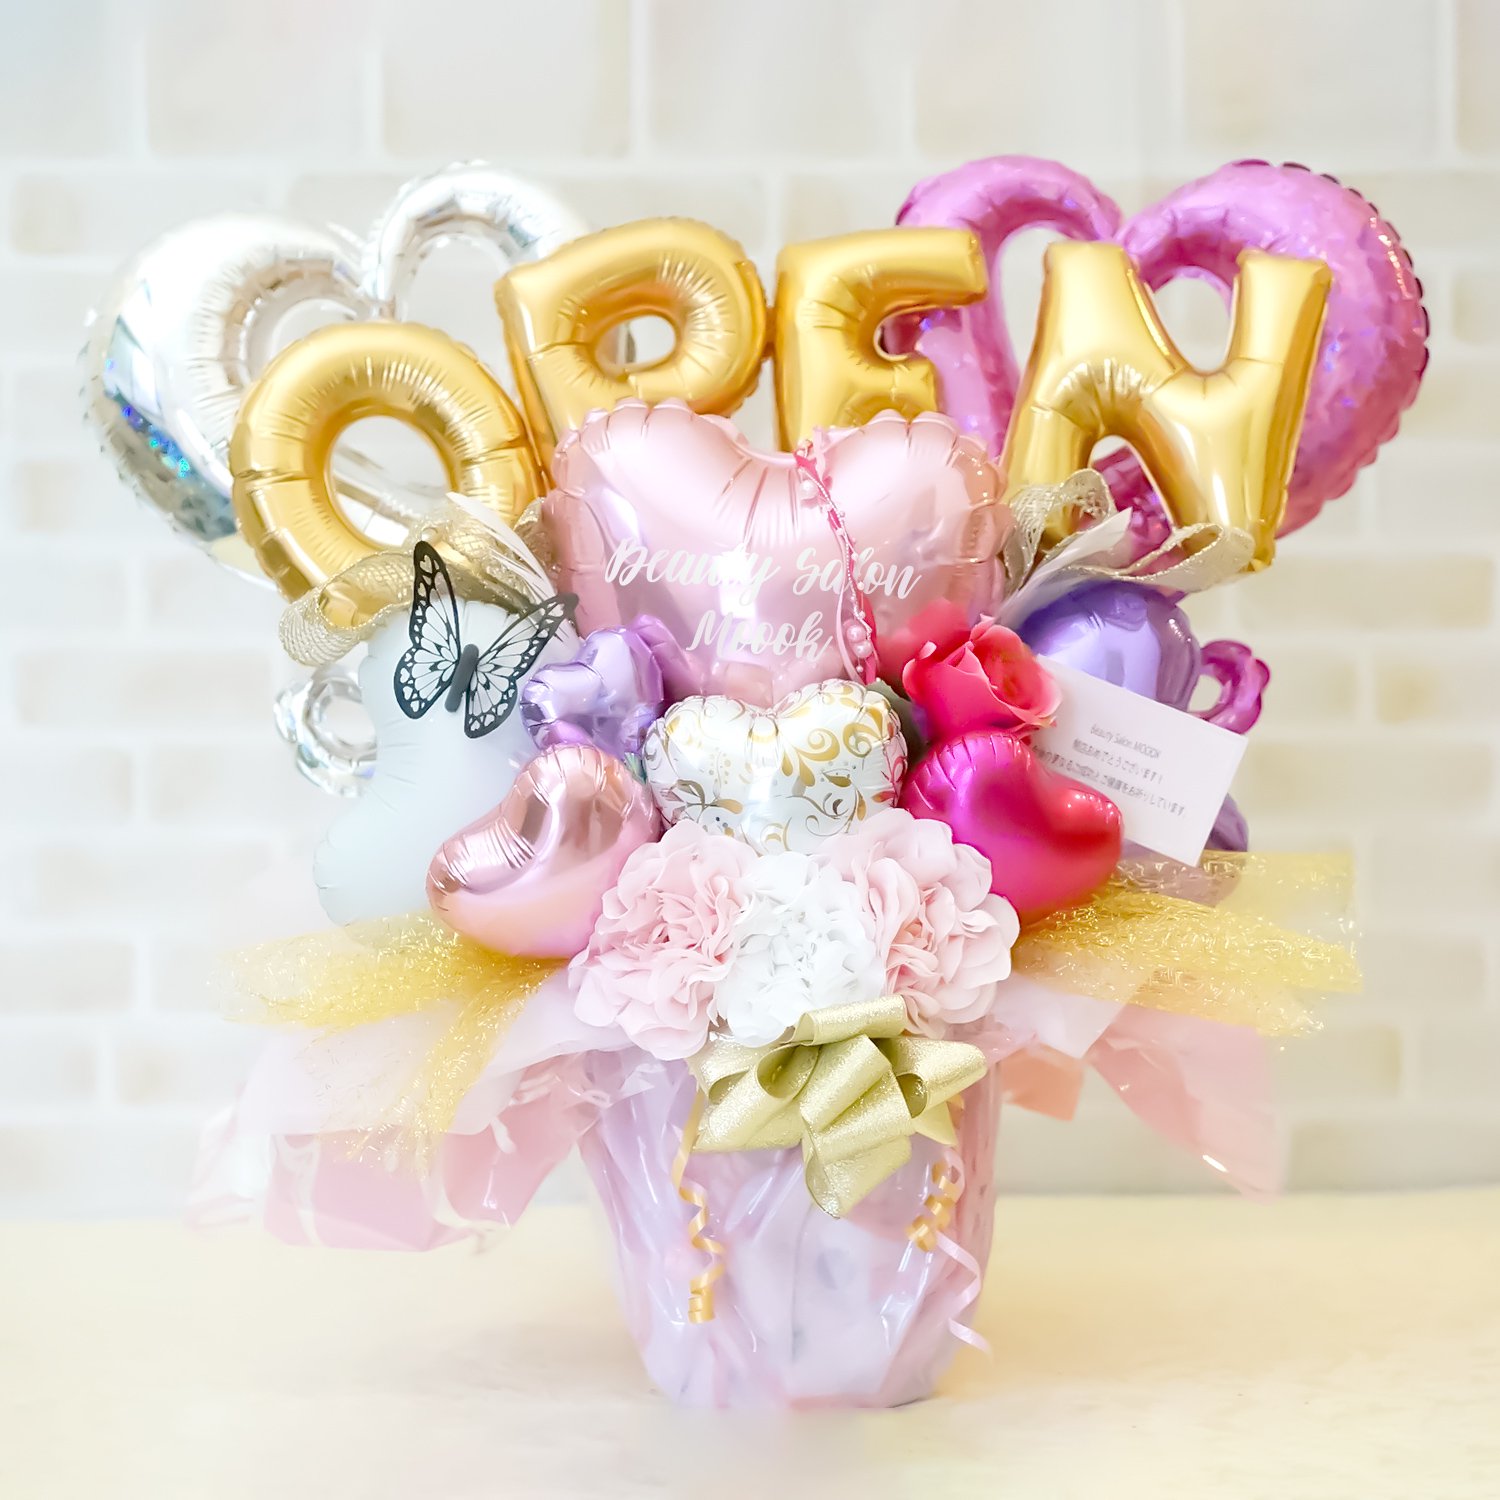 8,000 OPEN（ピンク） バルーン 風船 開店 開店祝い ピンク 豪華 オープン サプライズ プレゼント ギフト お祝い リボン 置き型 -  Sweet Heart Balloon